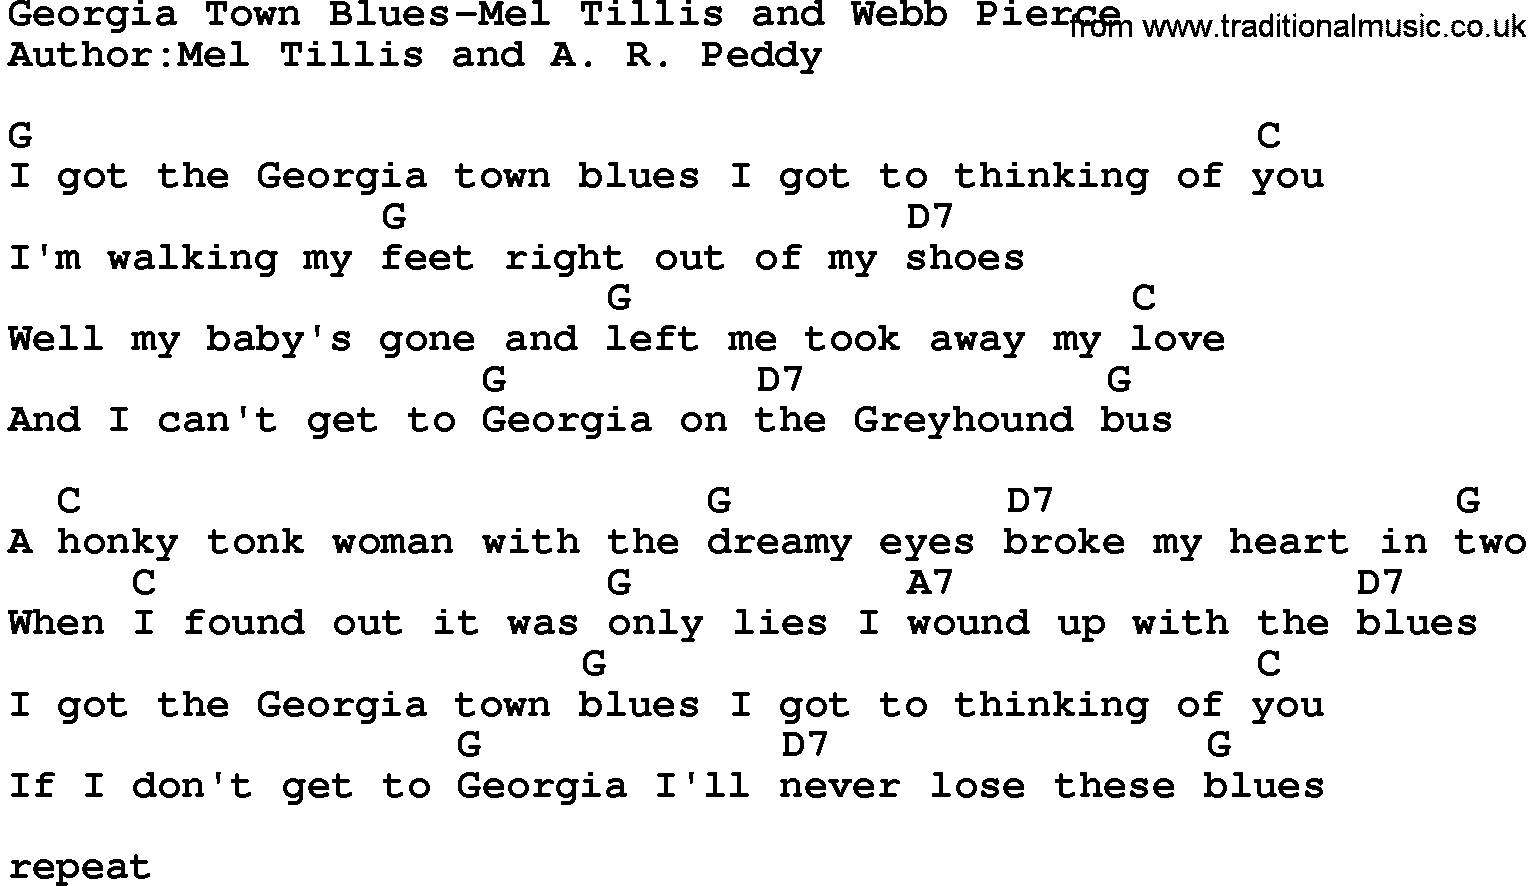 Country music song: Georgia Town Blues-Mel Tillis And Webb Pierce lyrics and chords